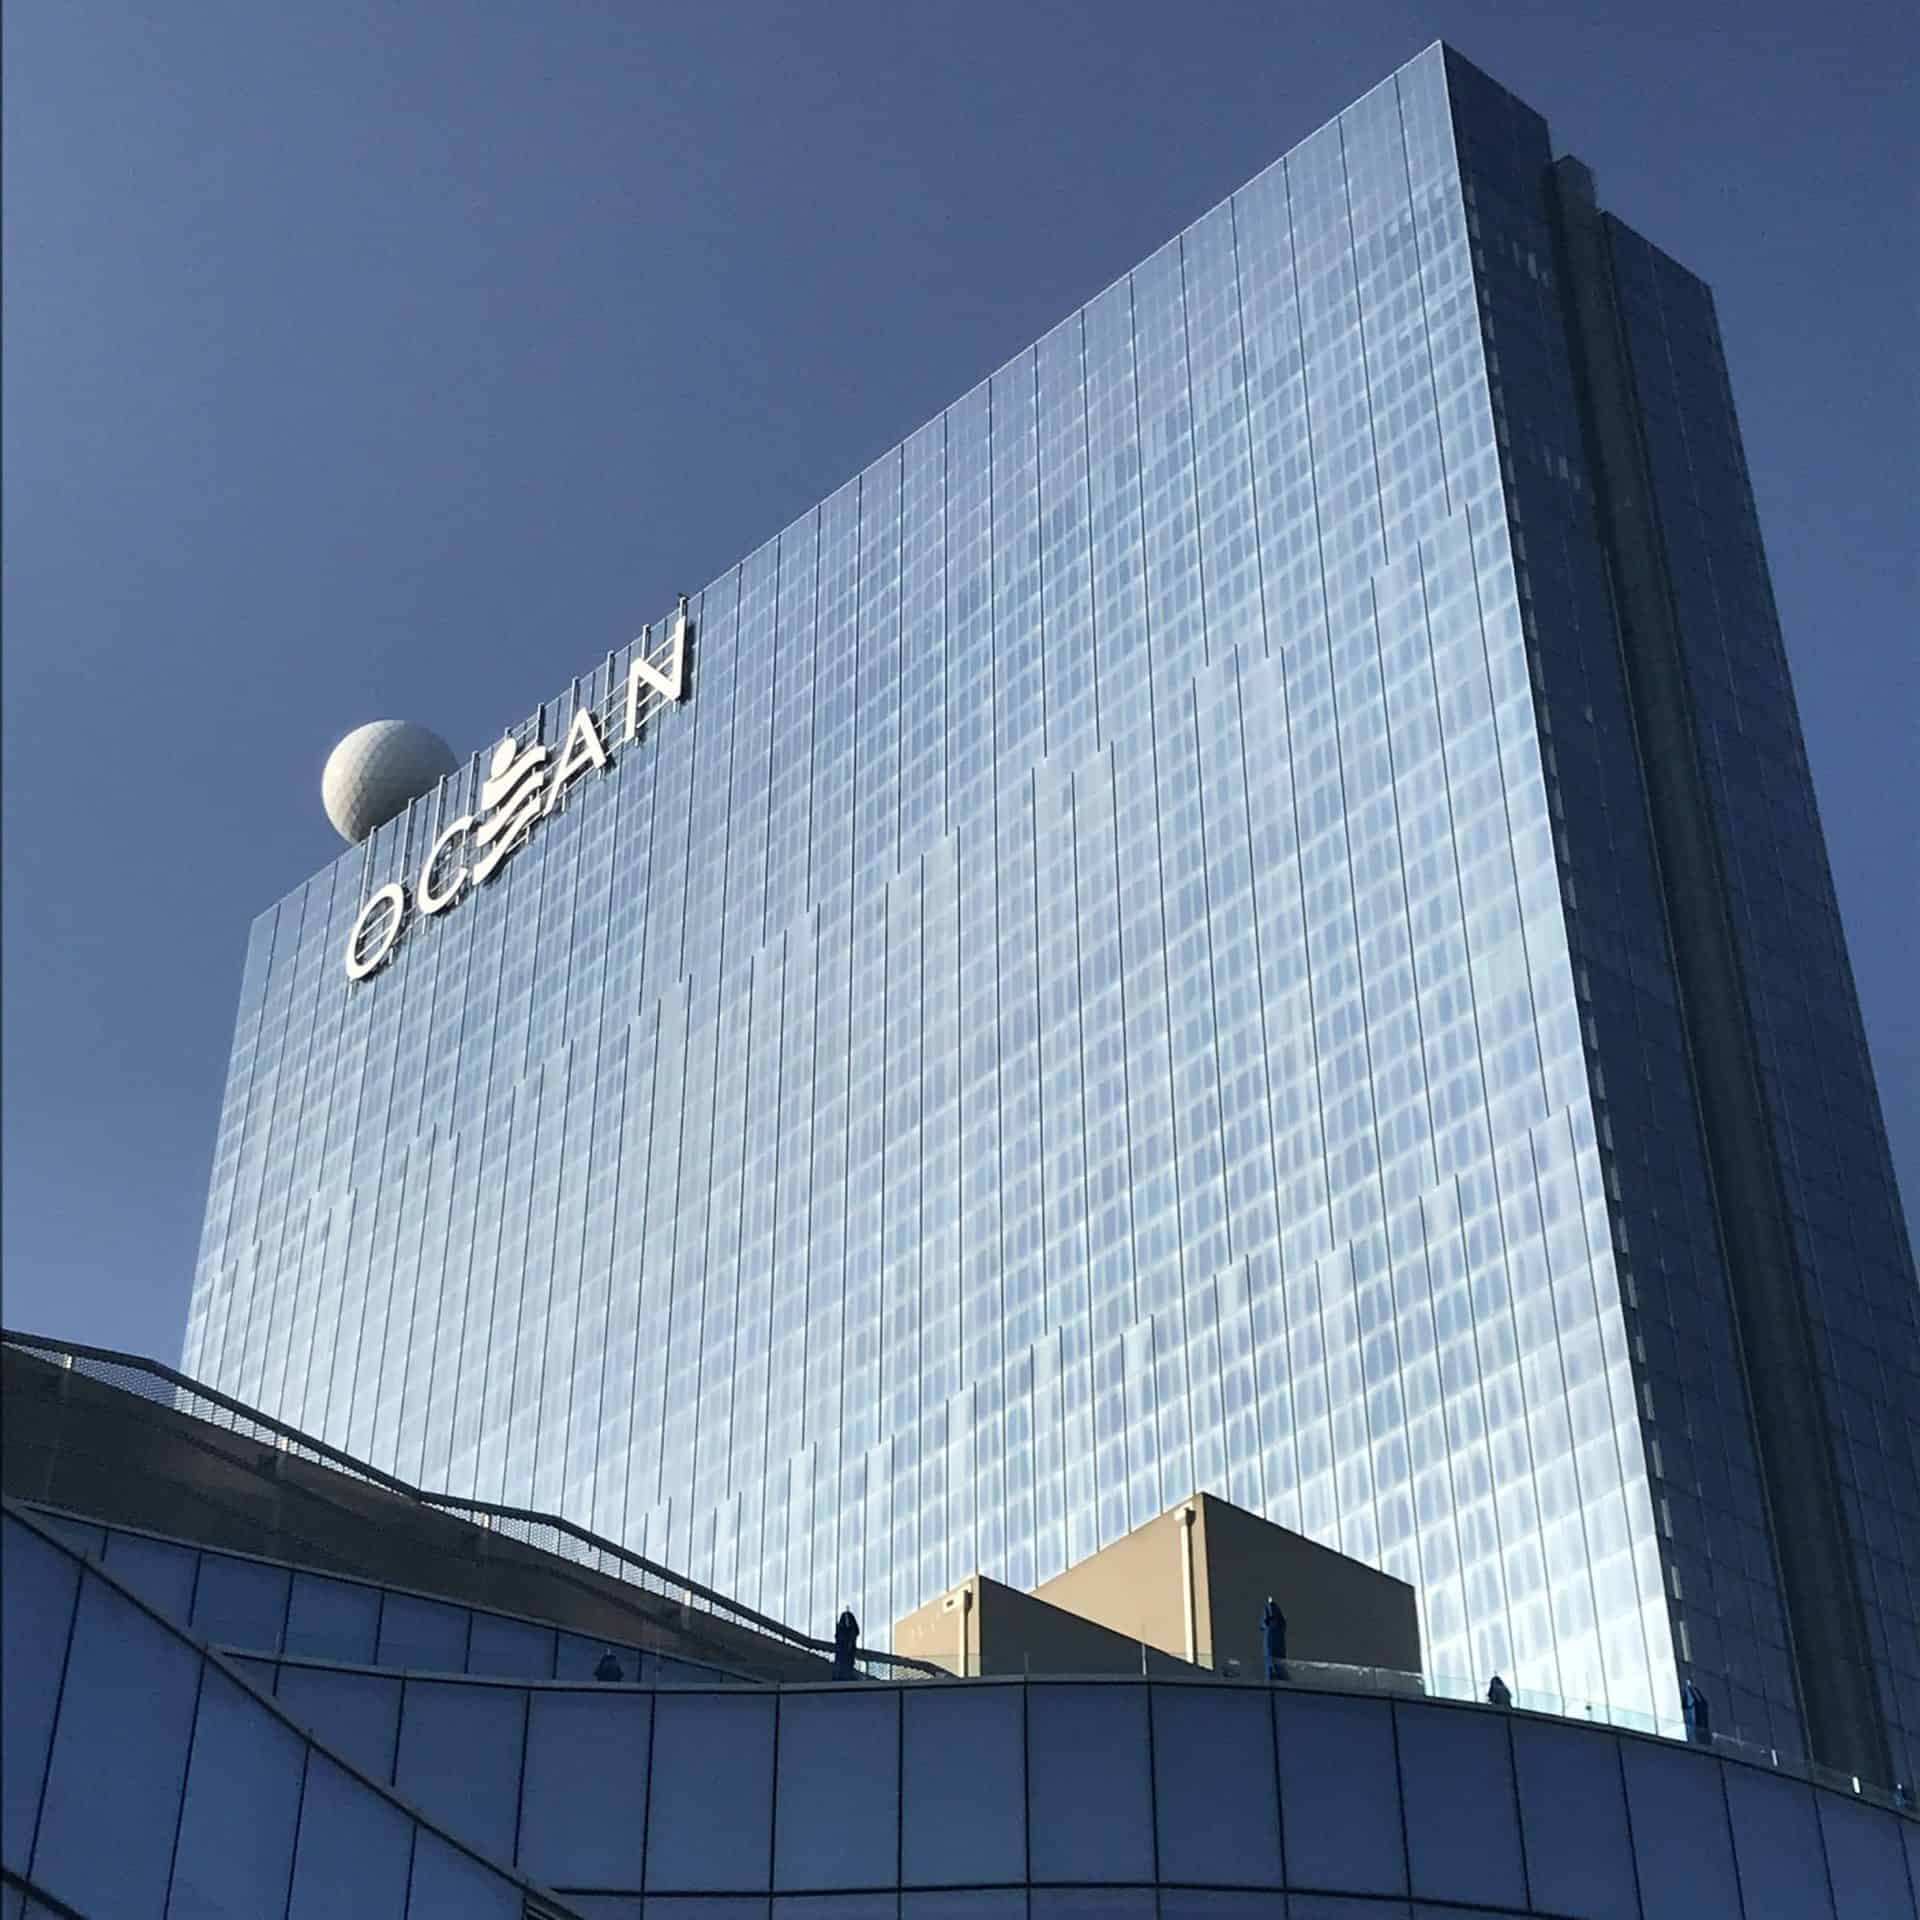 ocean resort casino in atlantic city parking